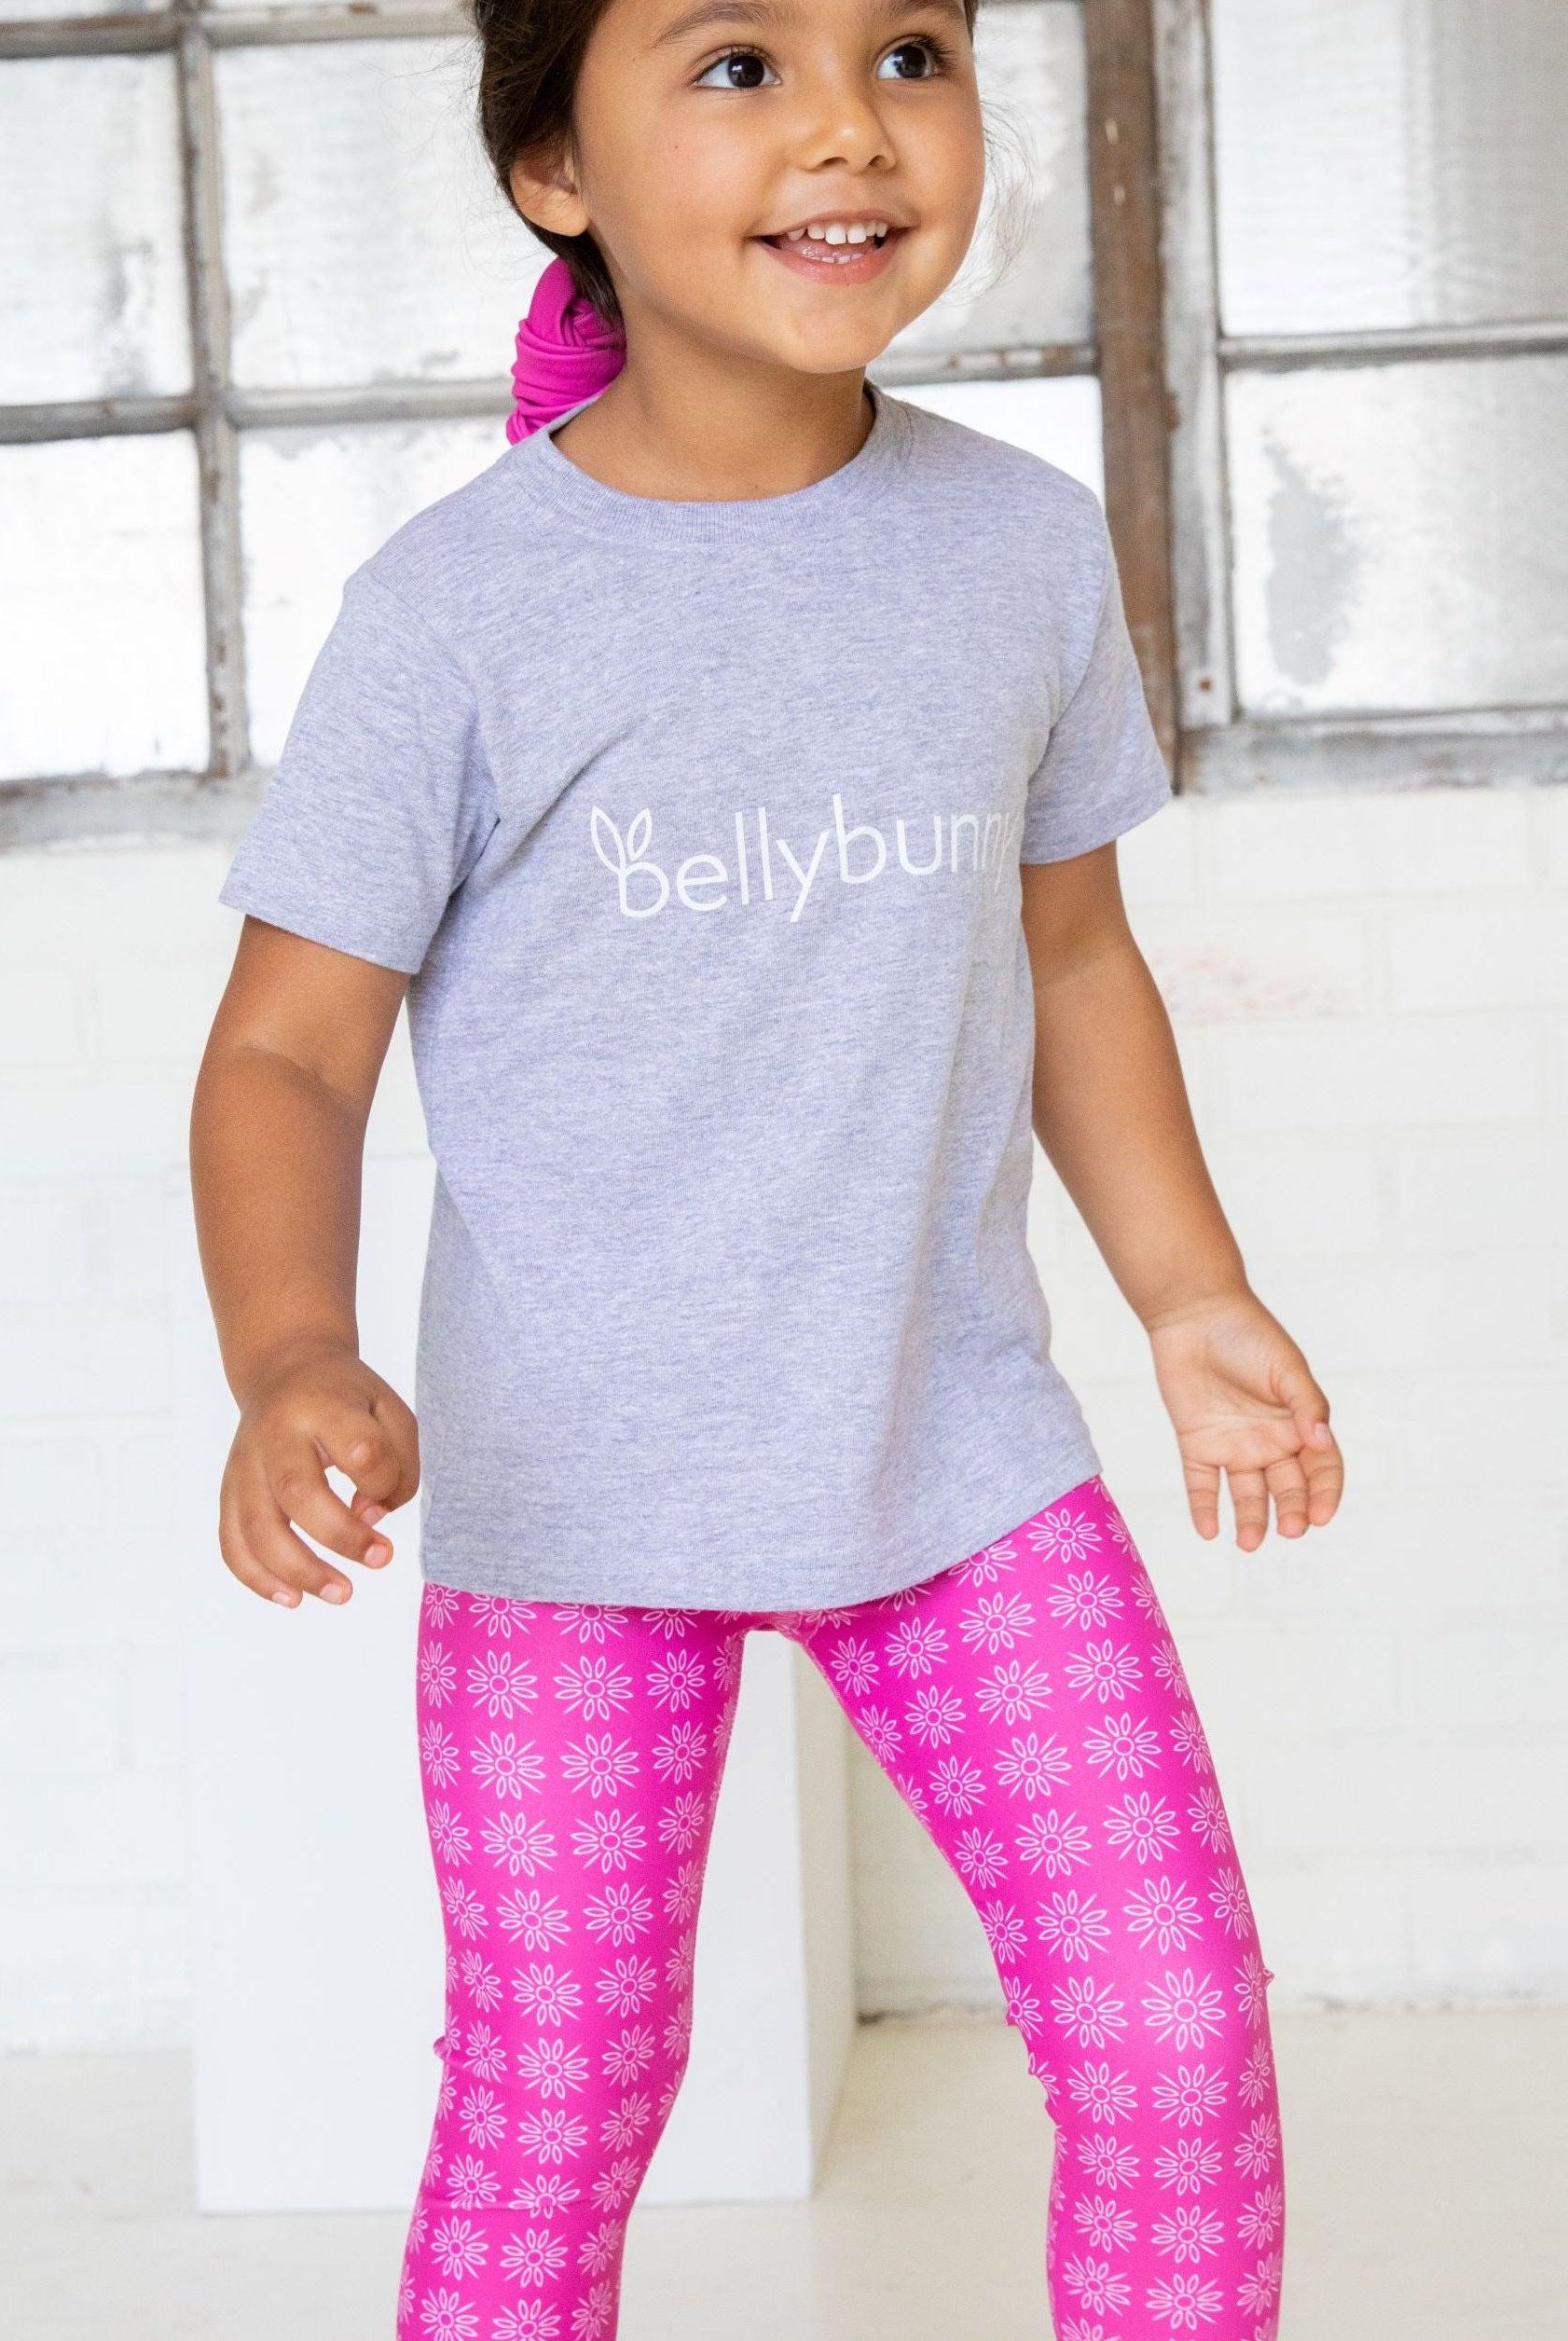 Bellybunny-Toddler Leggings